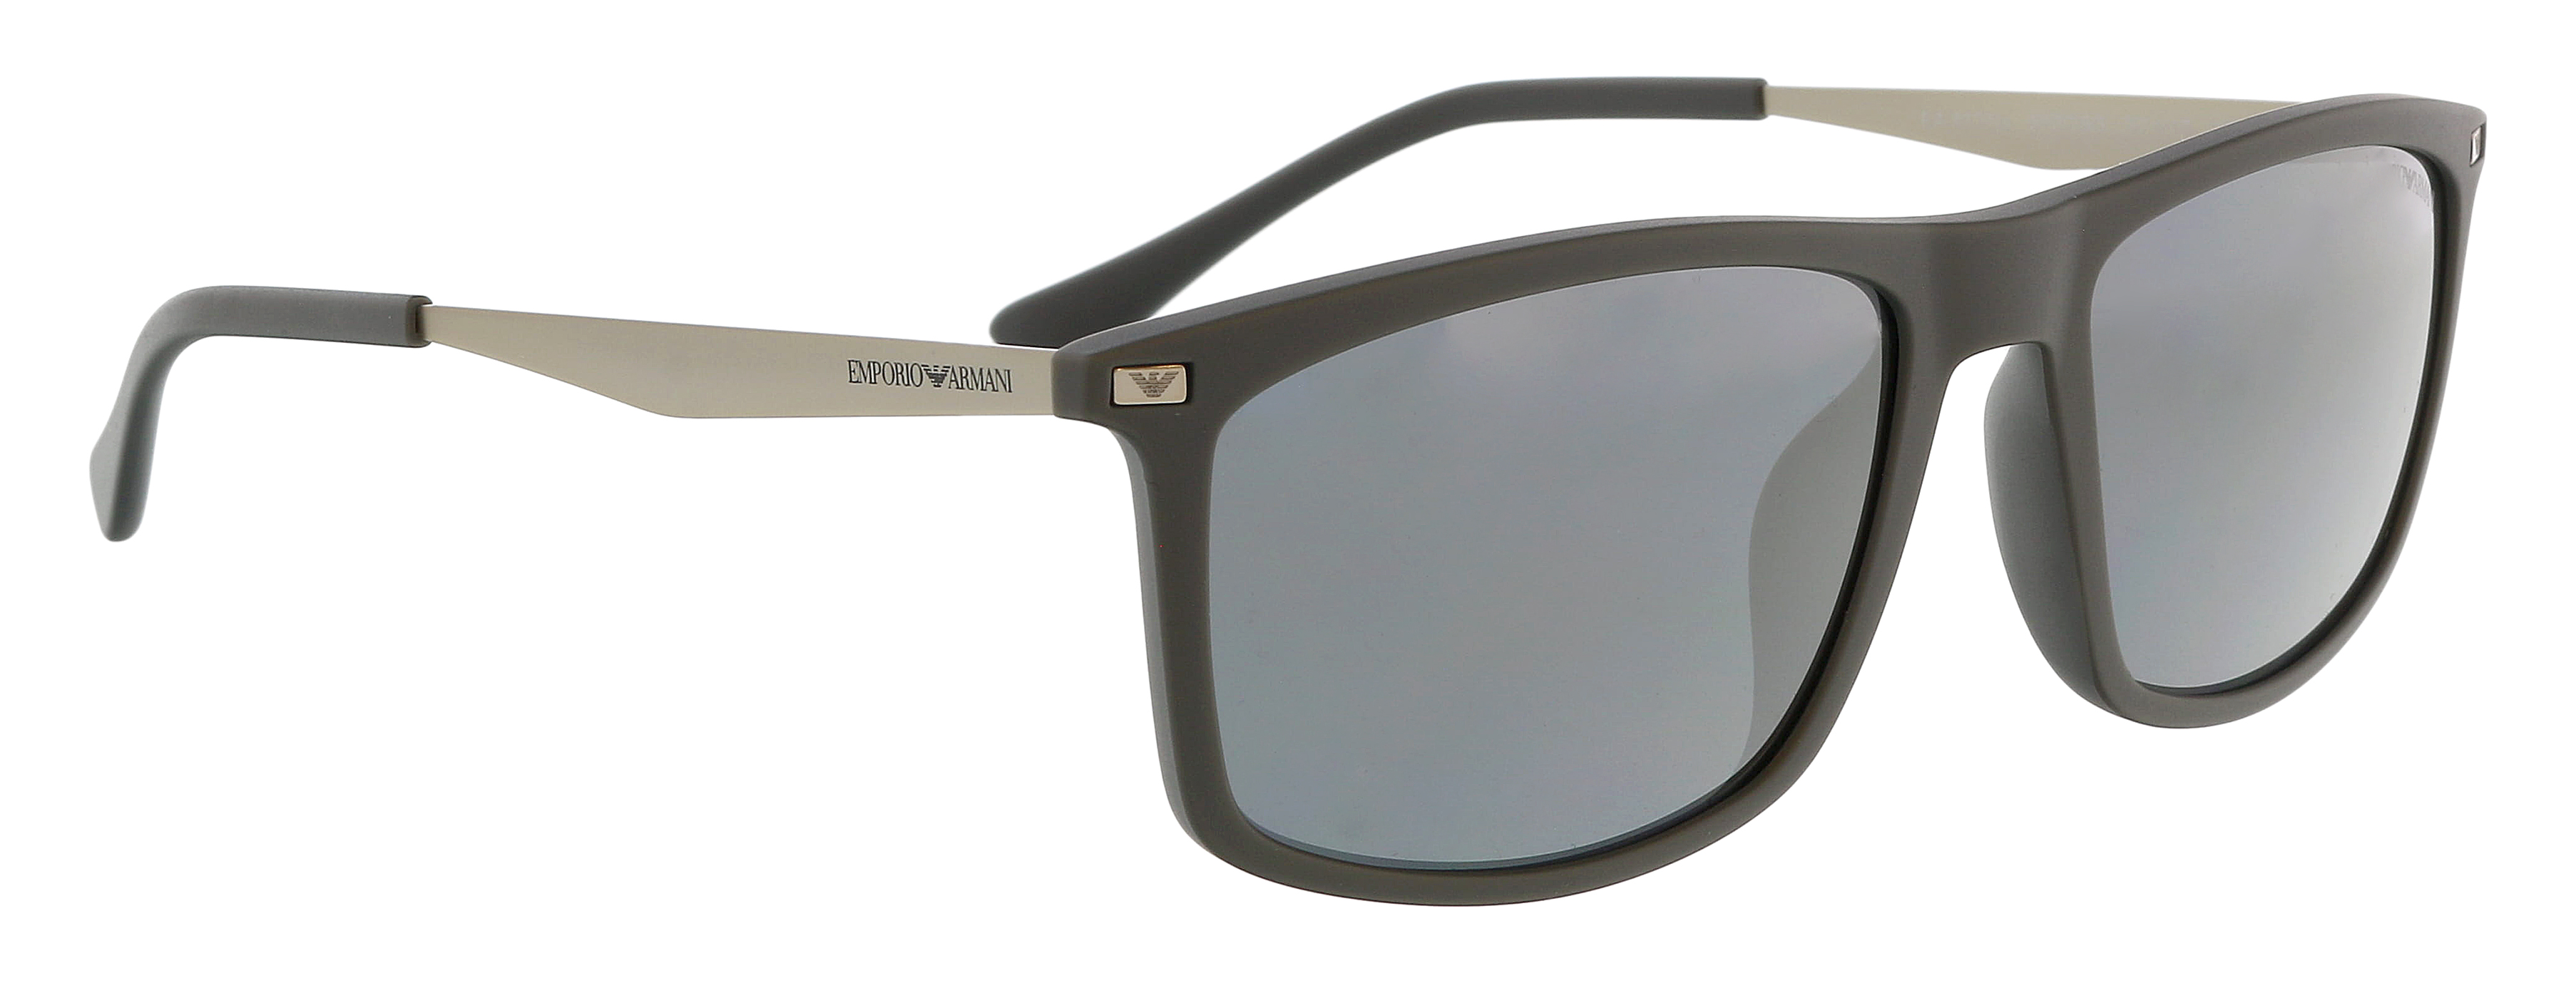 Sunglasses Emporio Armani EA 4171 U 54376G Matte Grey - image 3 of 5